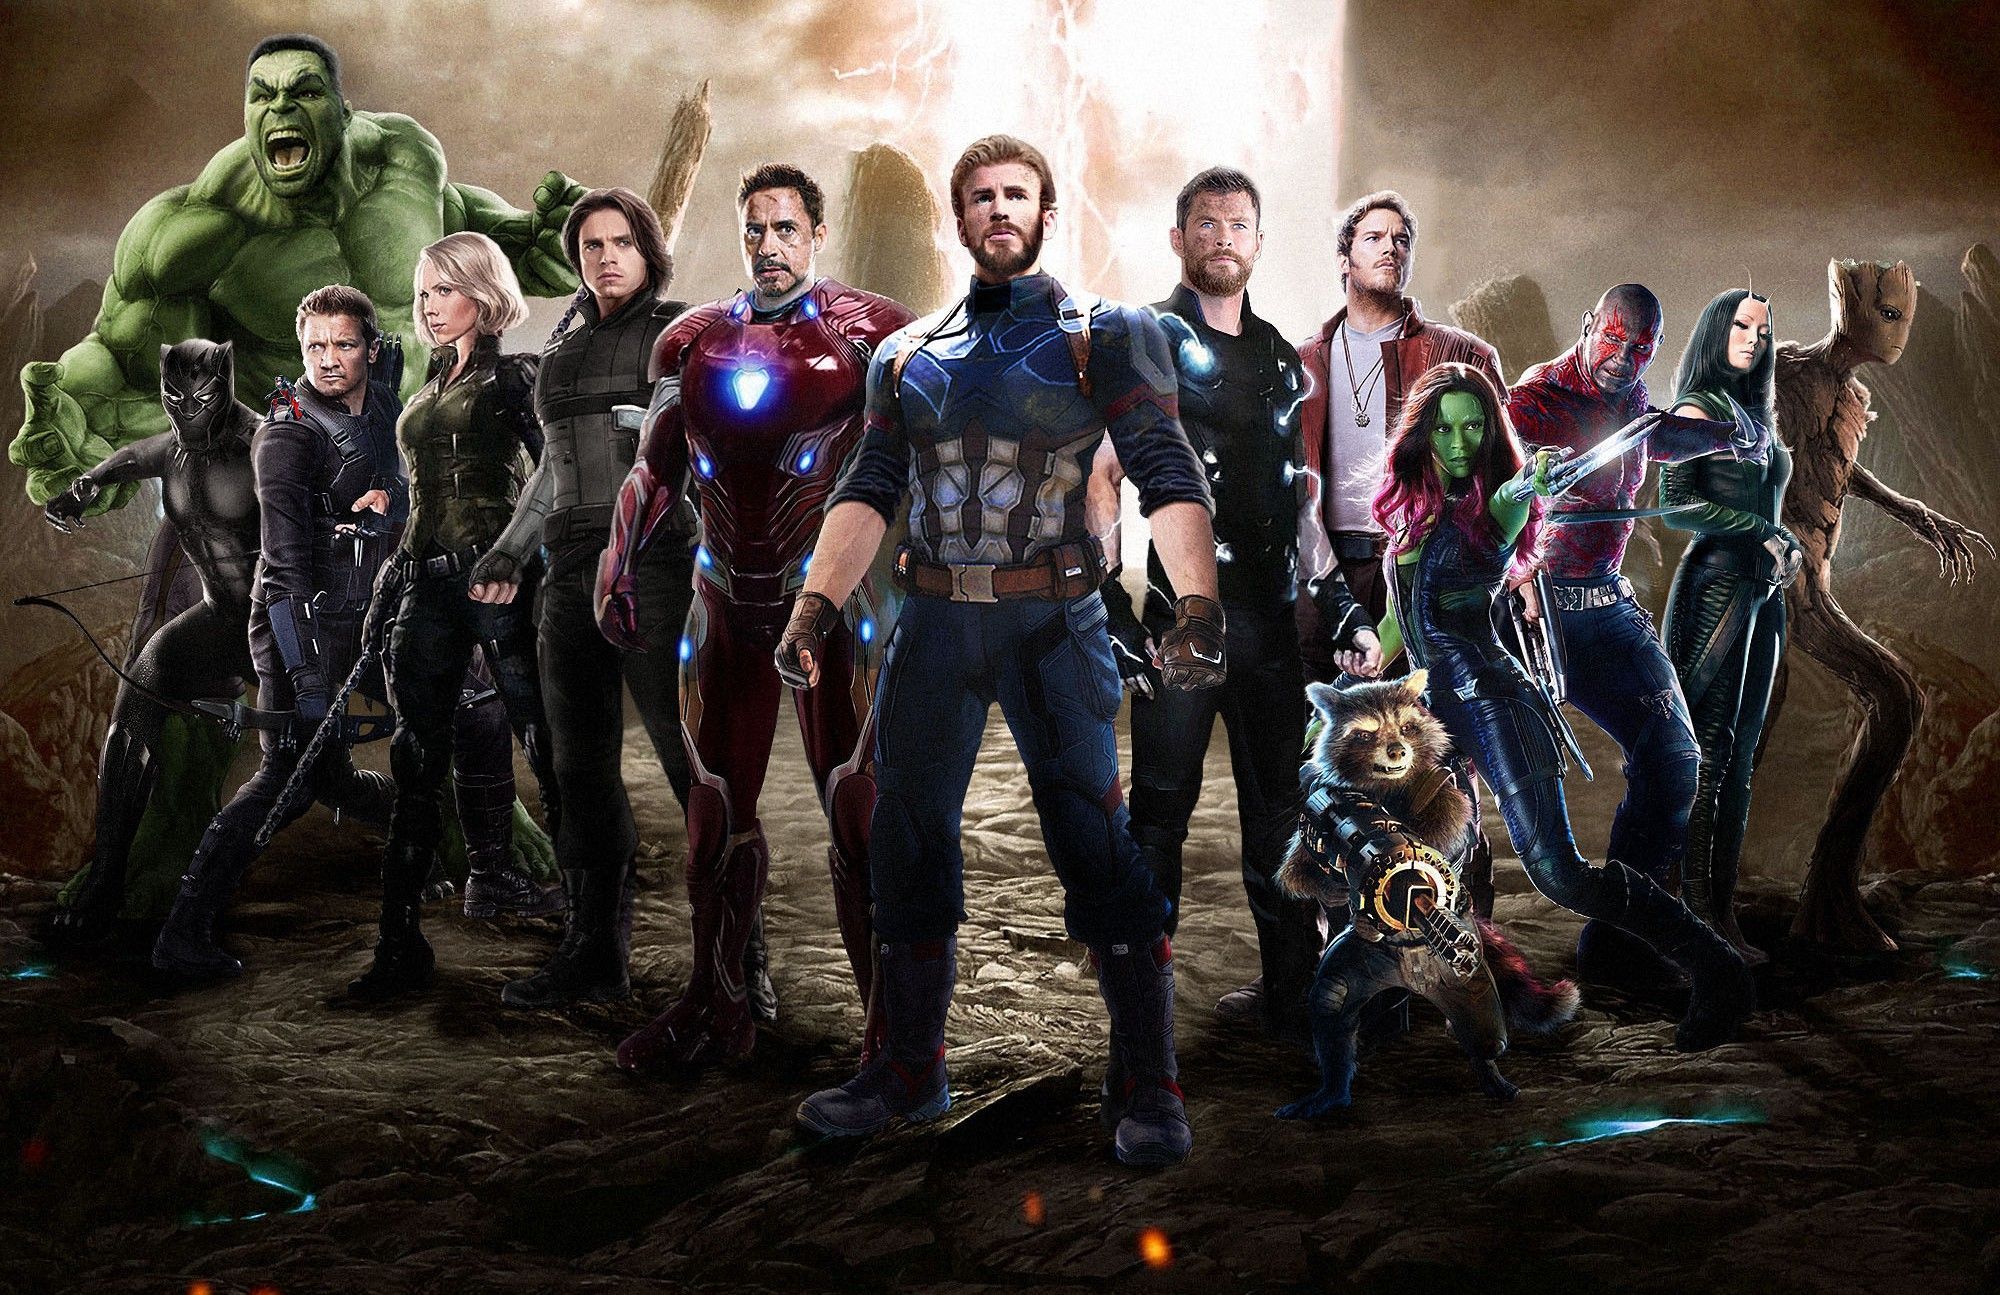 Avengers Endgame HD Wallpaper for Smartphones, Laptops and PC's